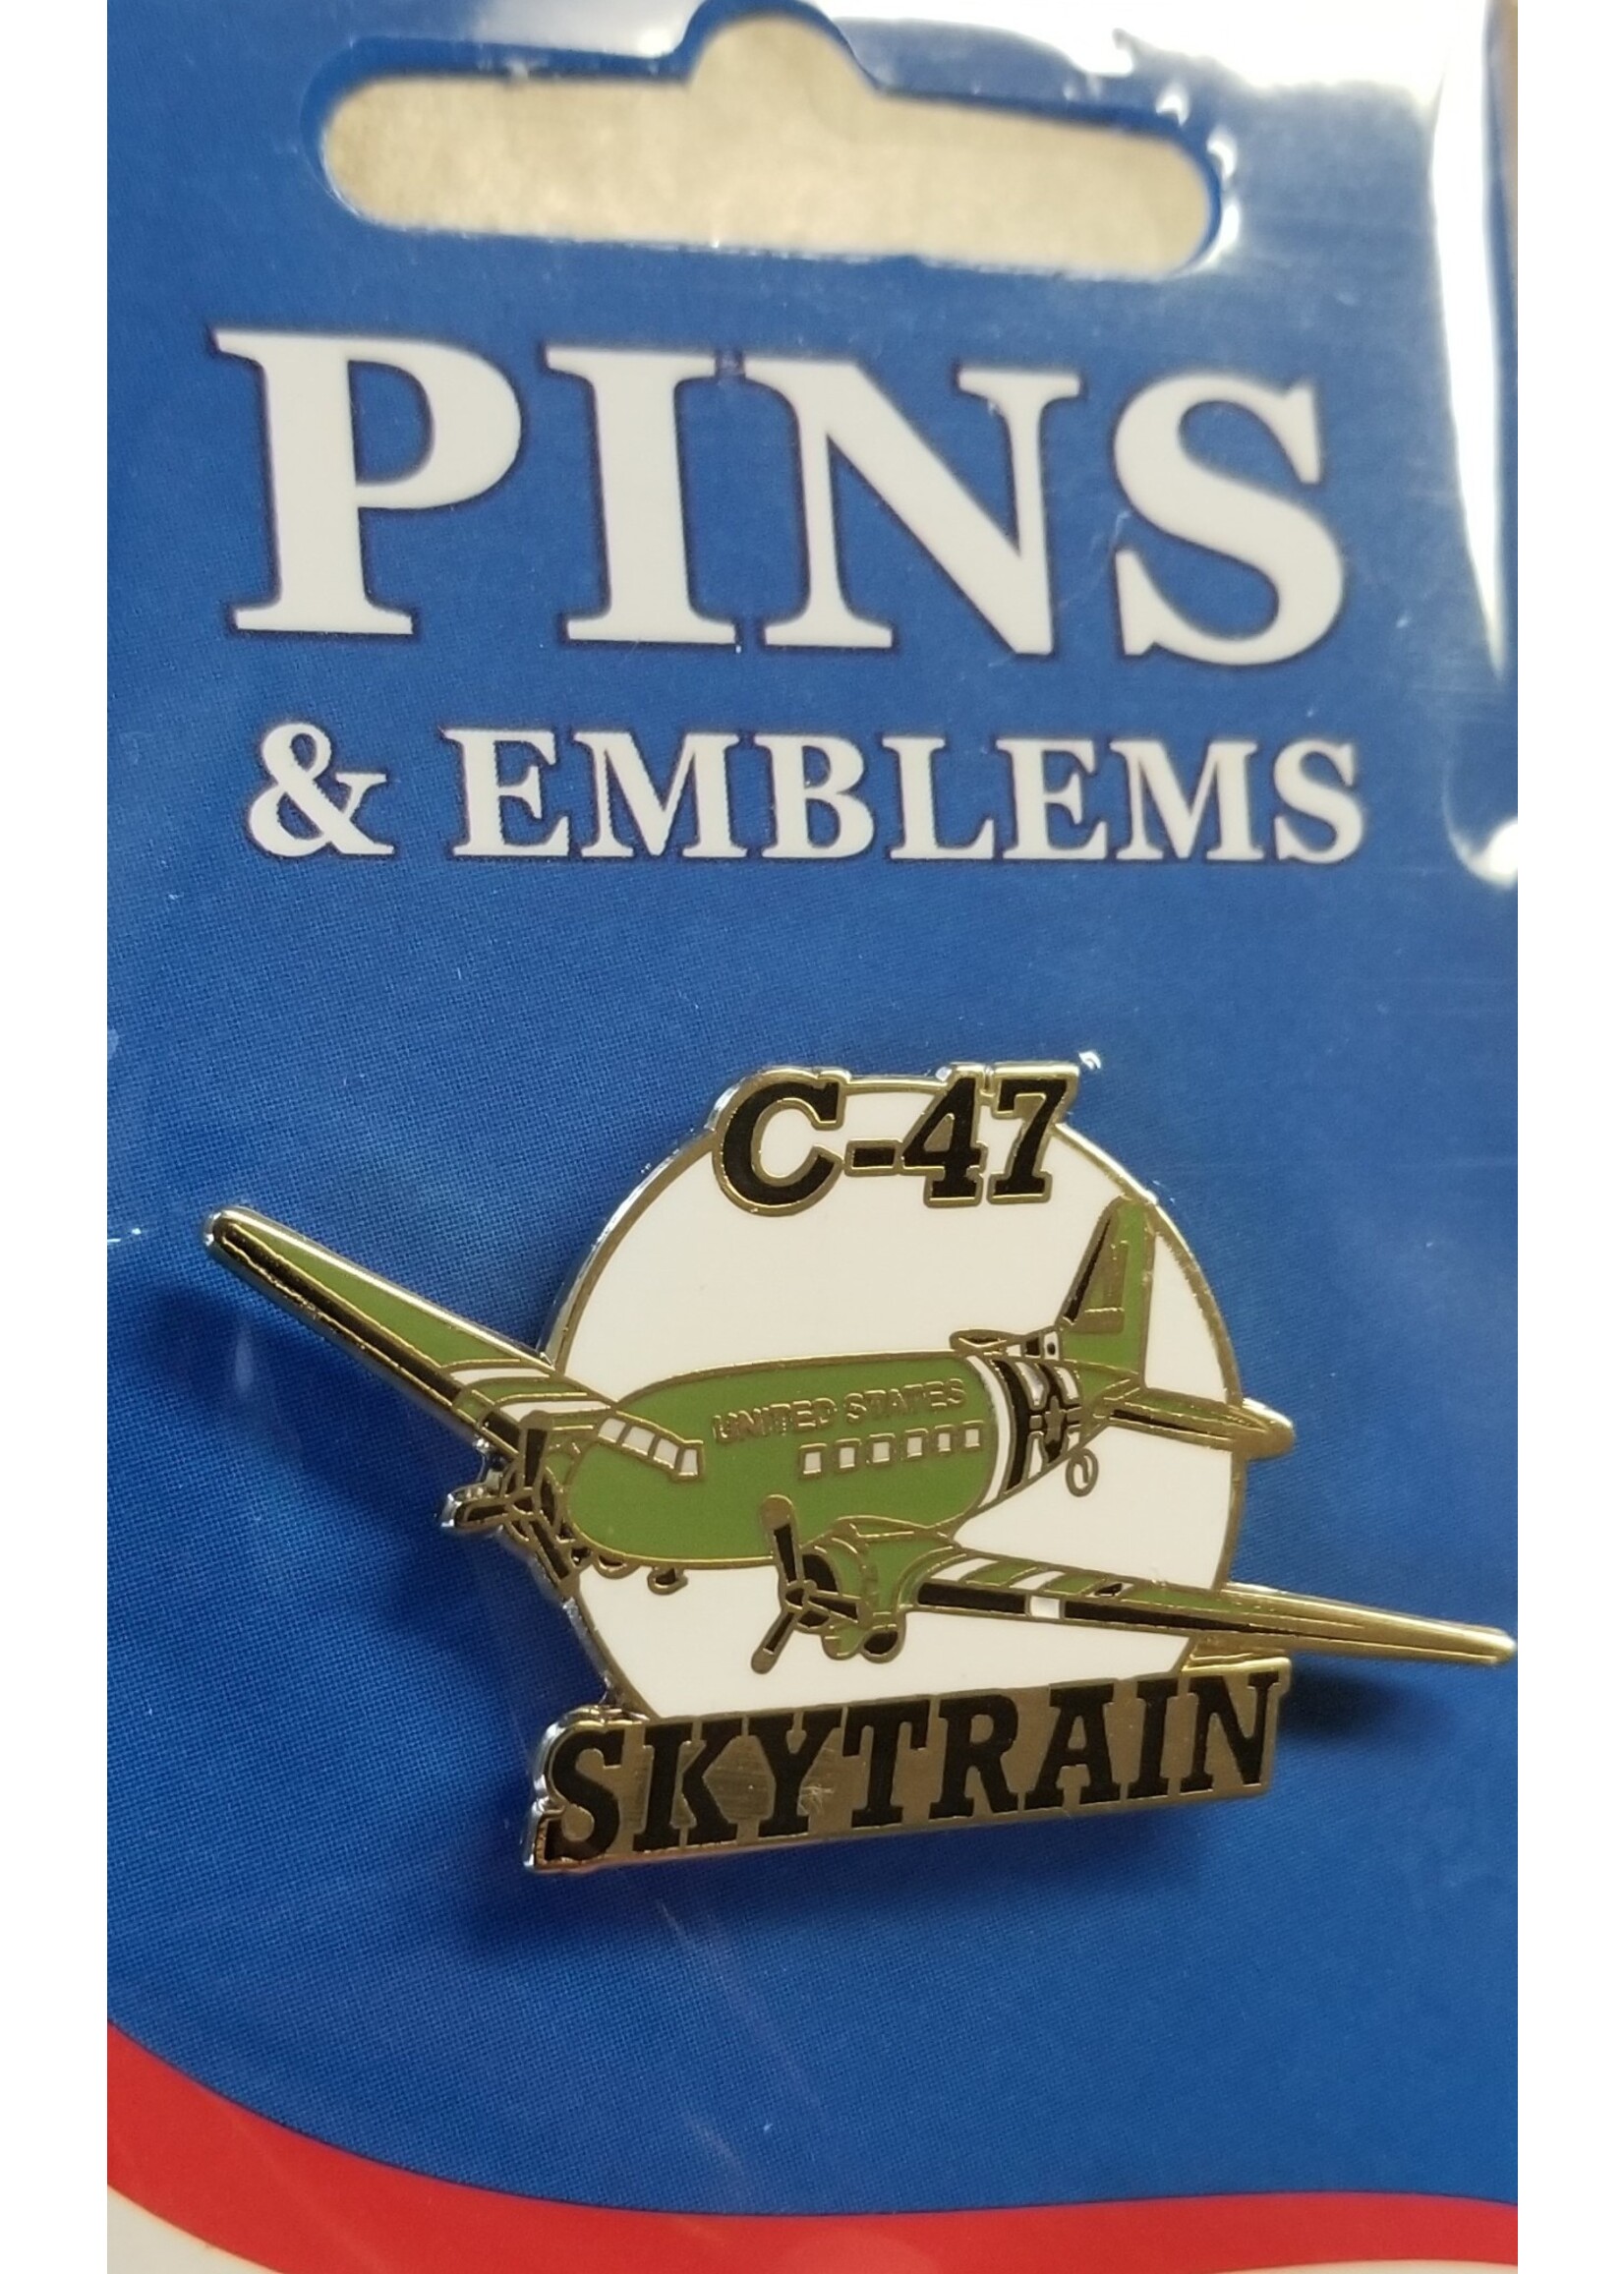 Eagle Emblems Pin C-47 Skytrain